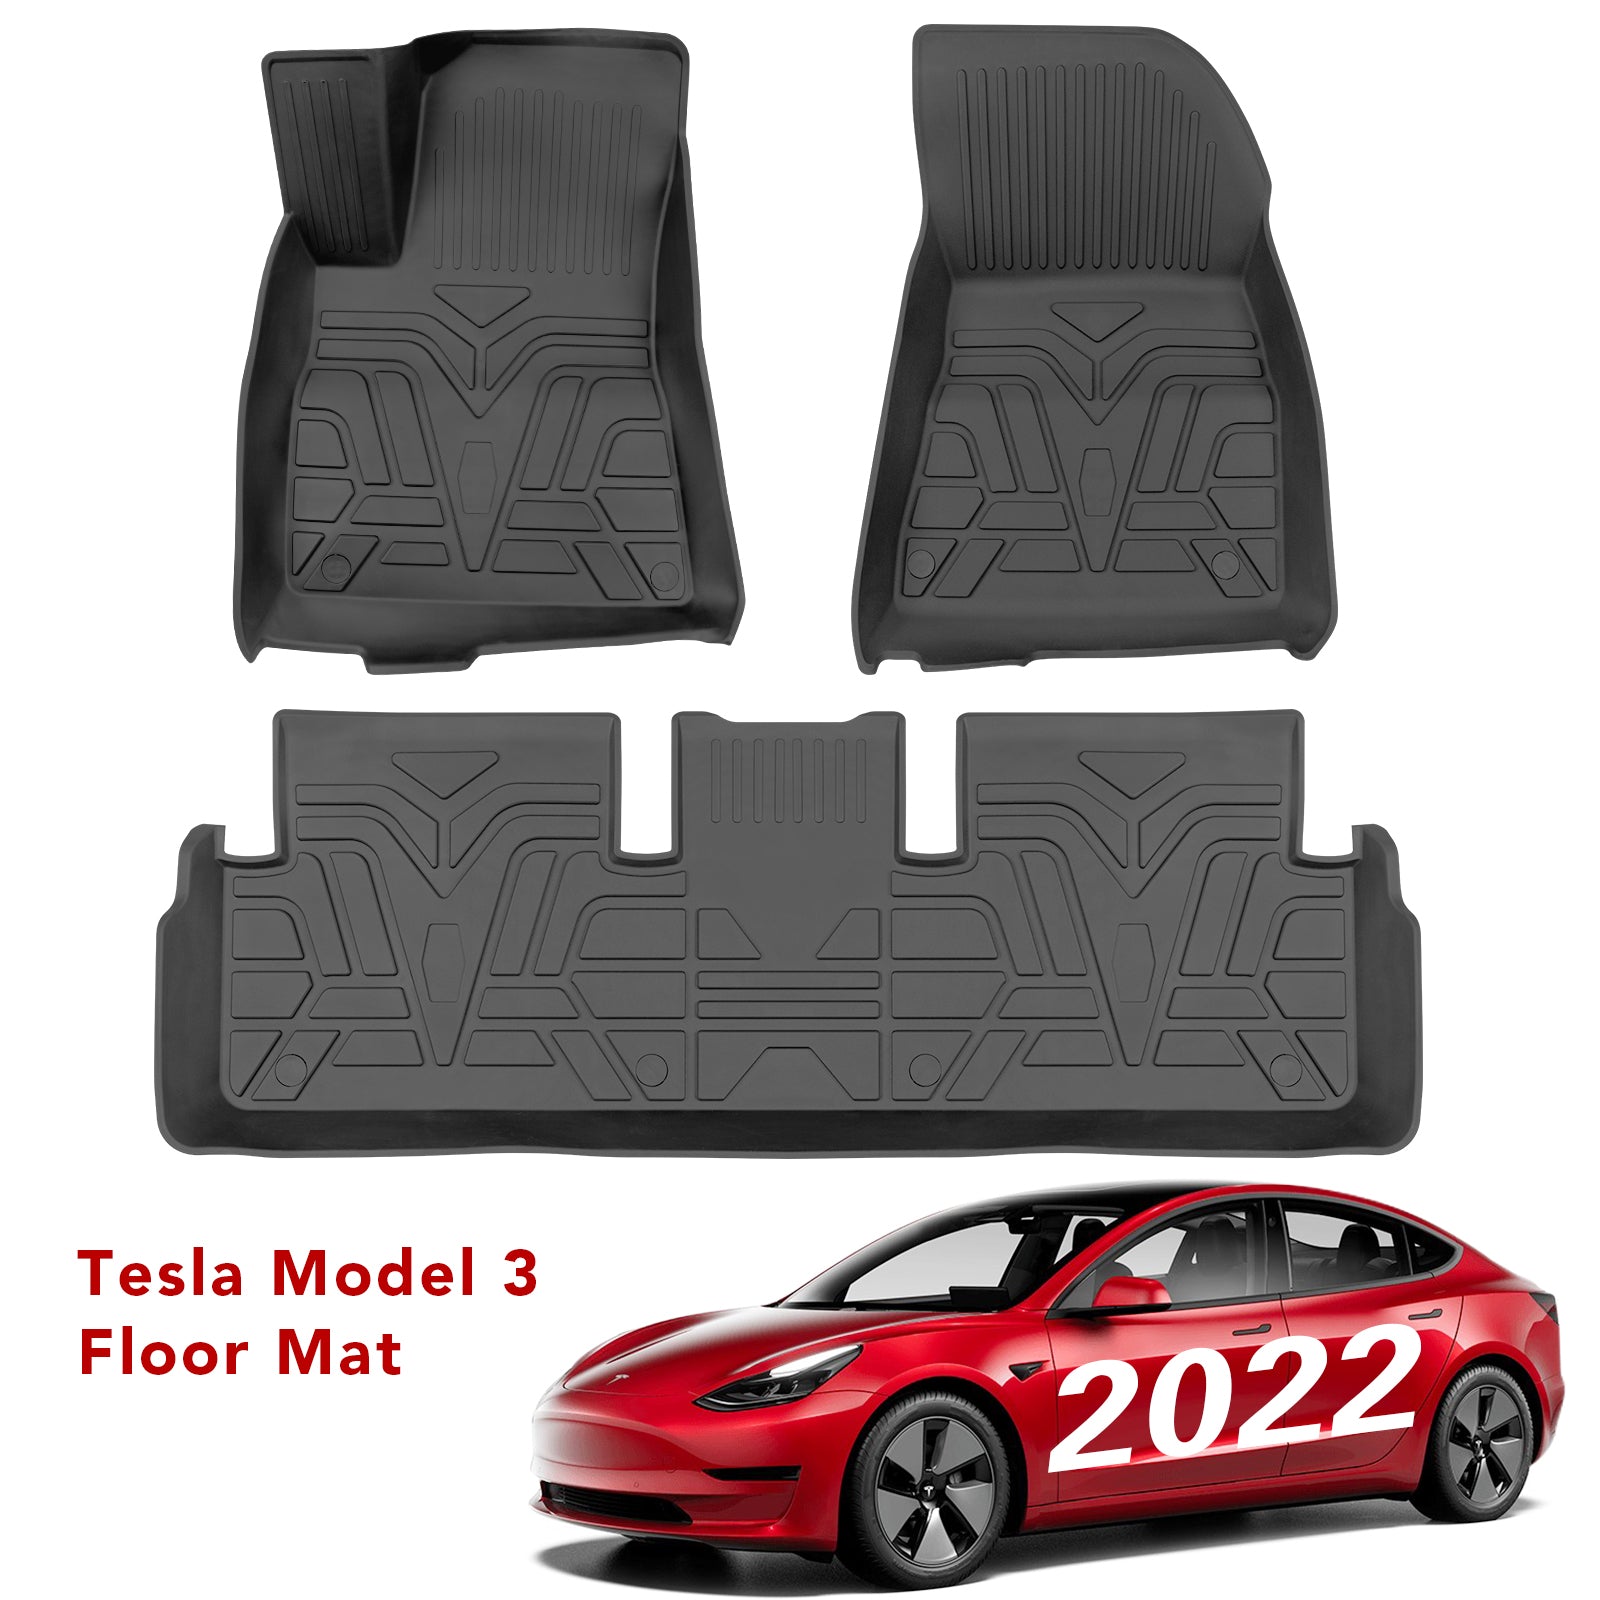 Tesla Model 3 Car Mats  Rubber & Carpet Floor Mats